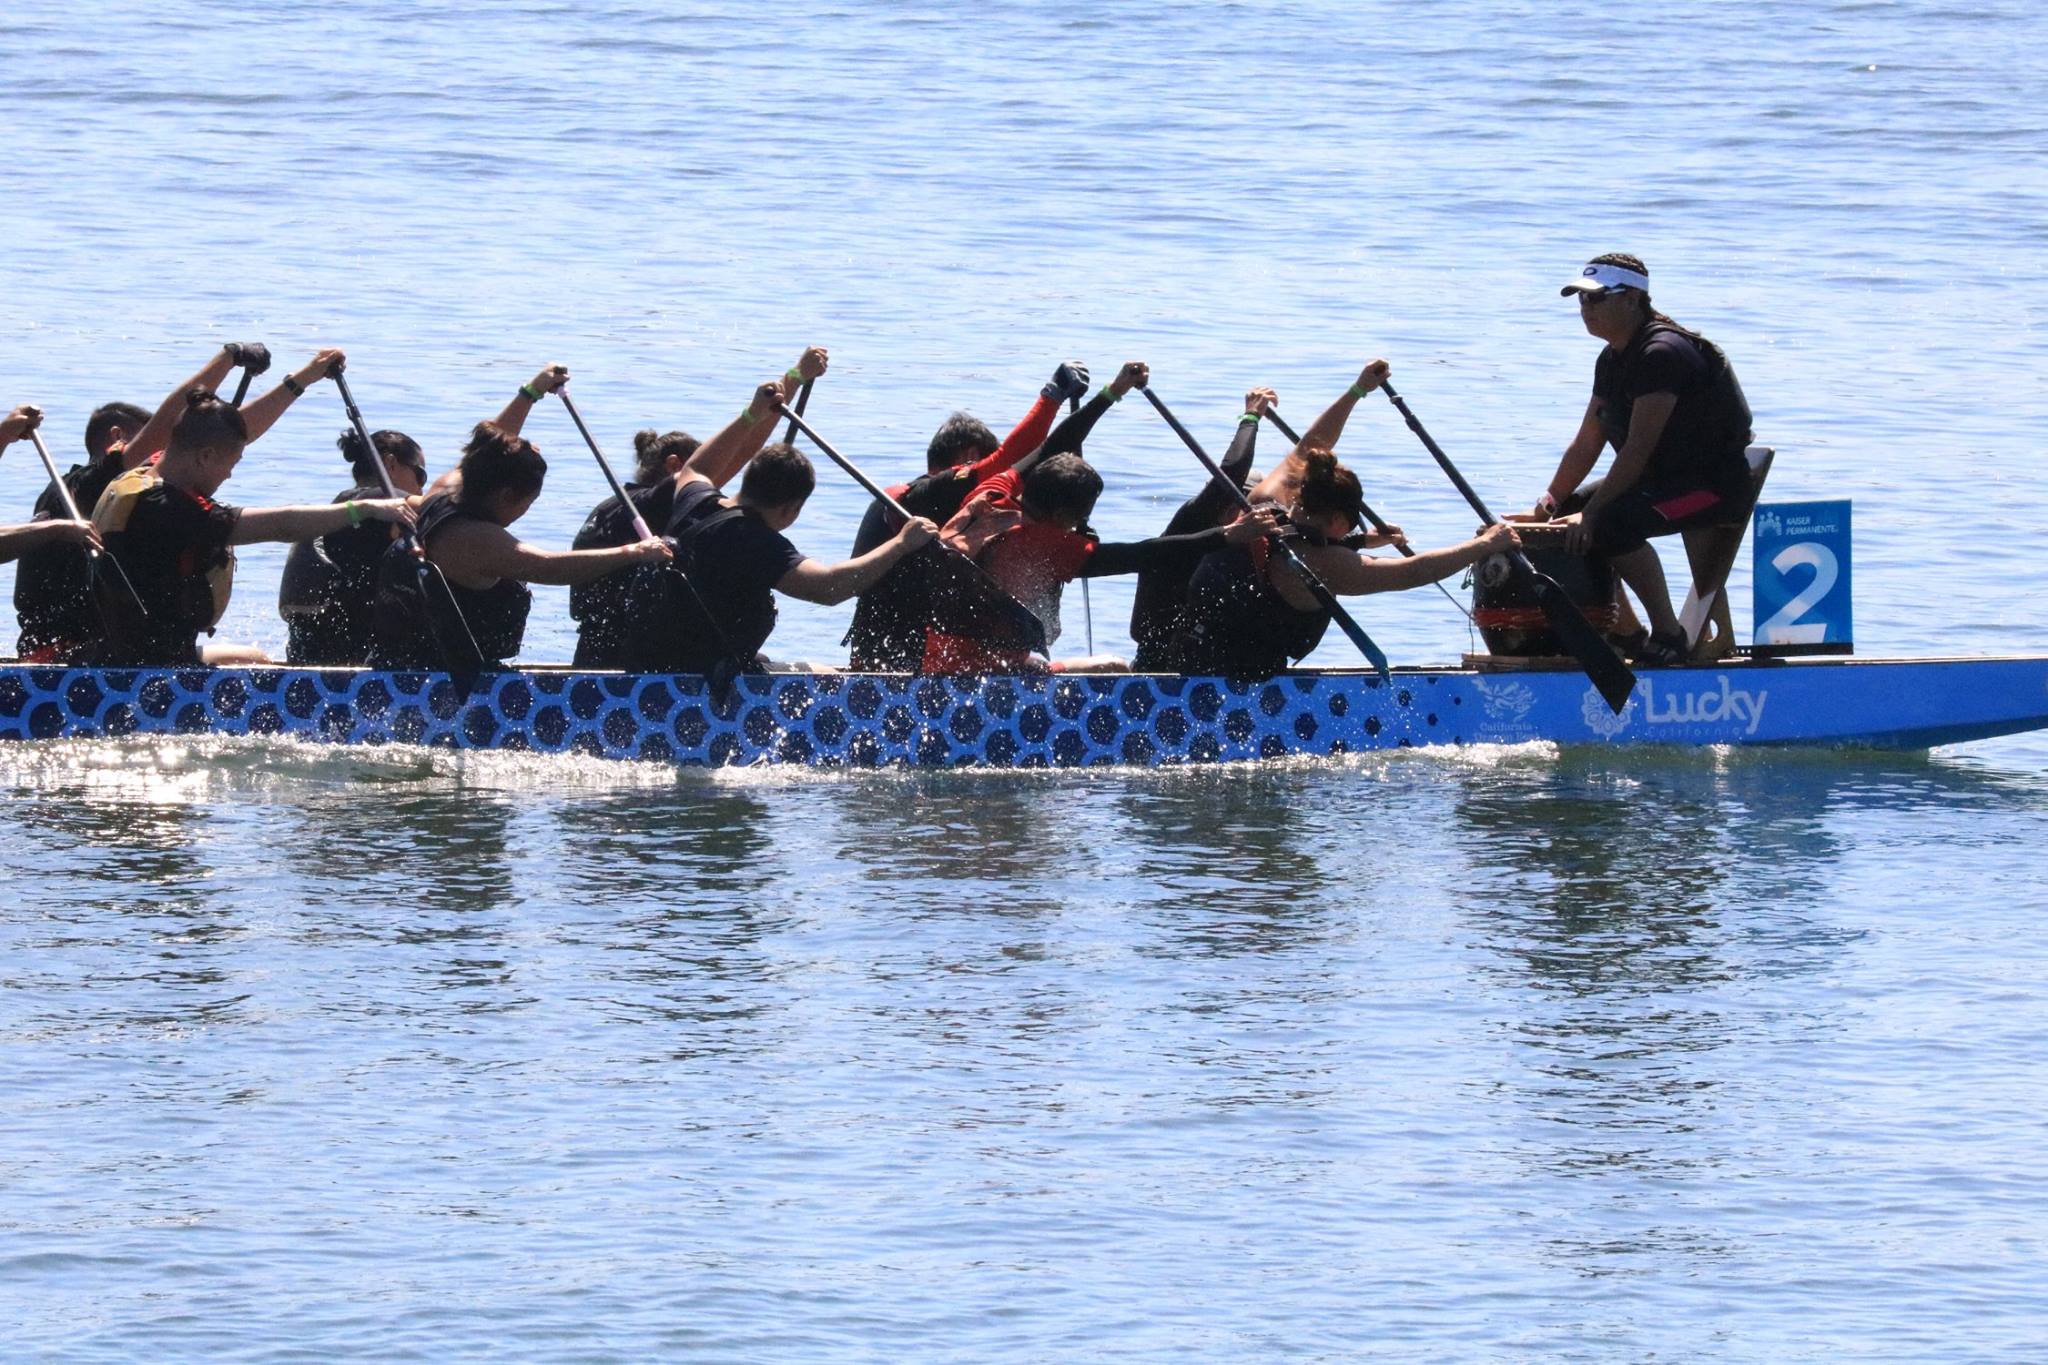 FB_LA Dragon Boat Race Club team on the water